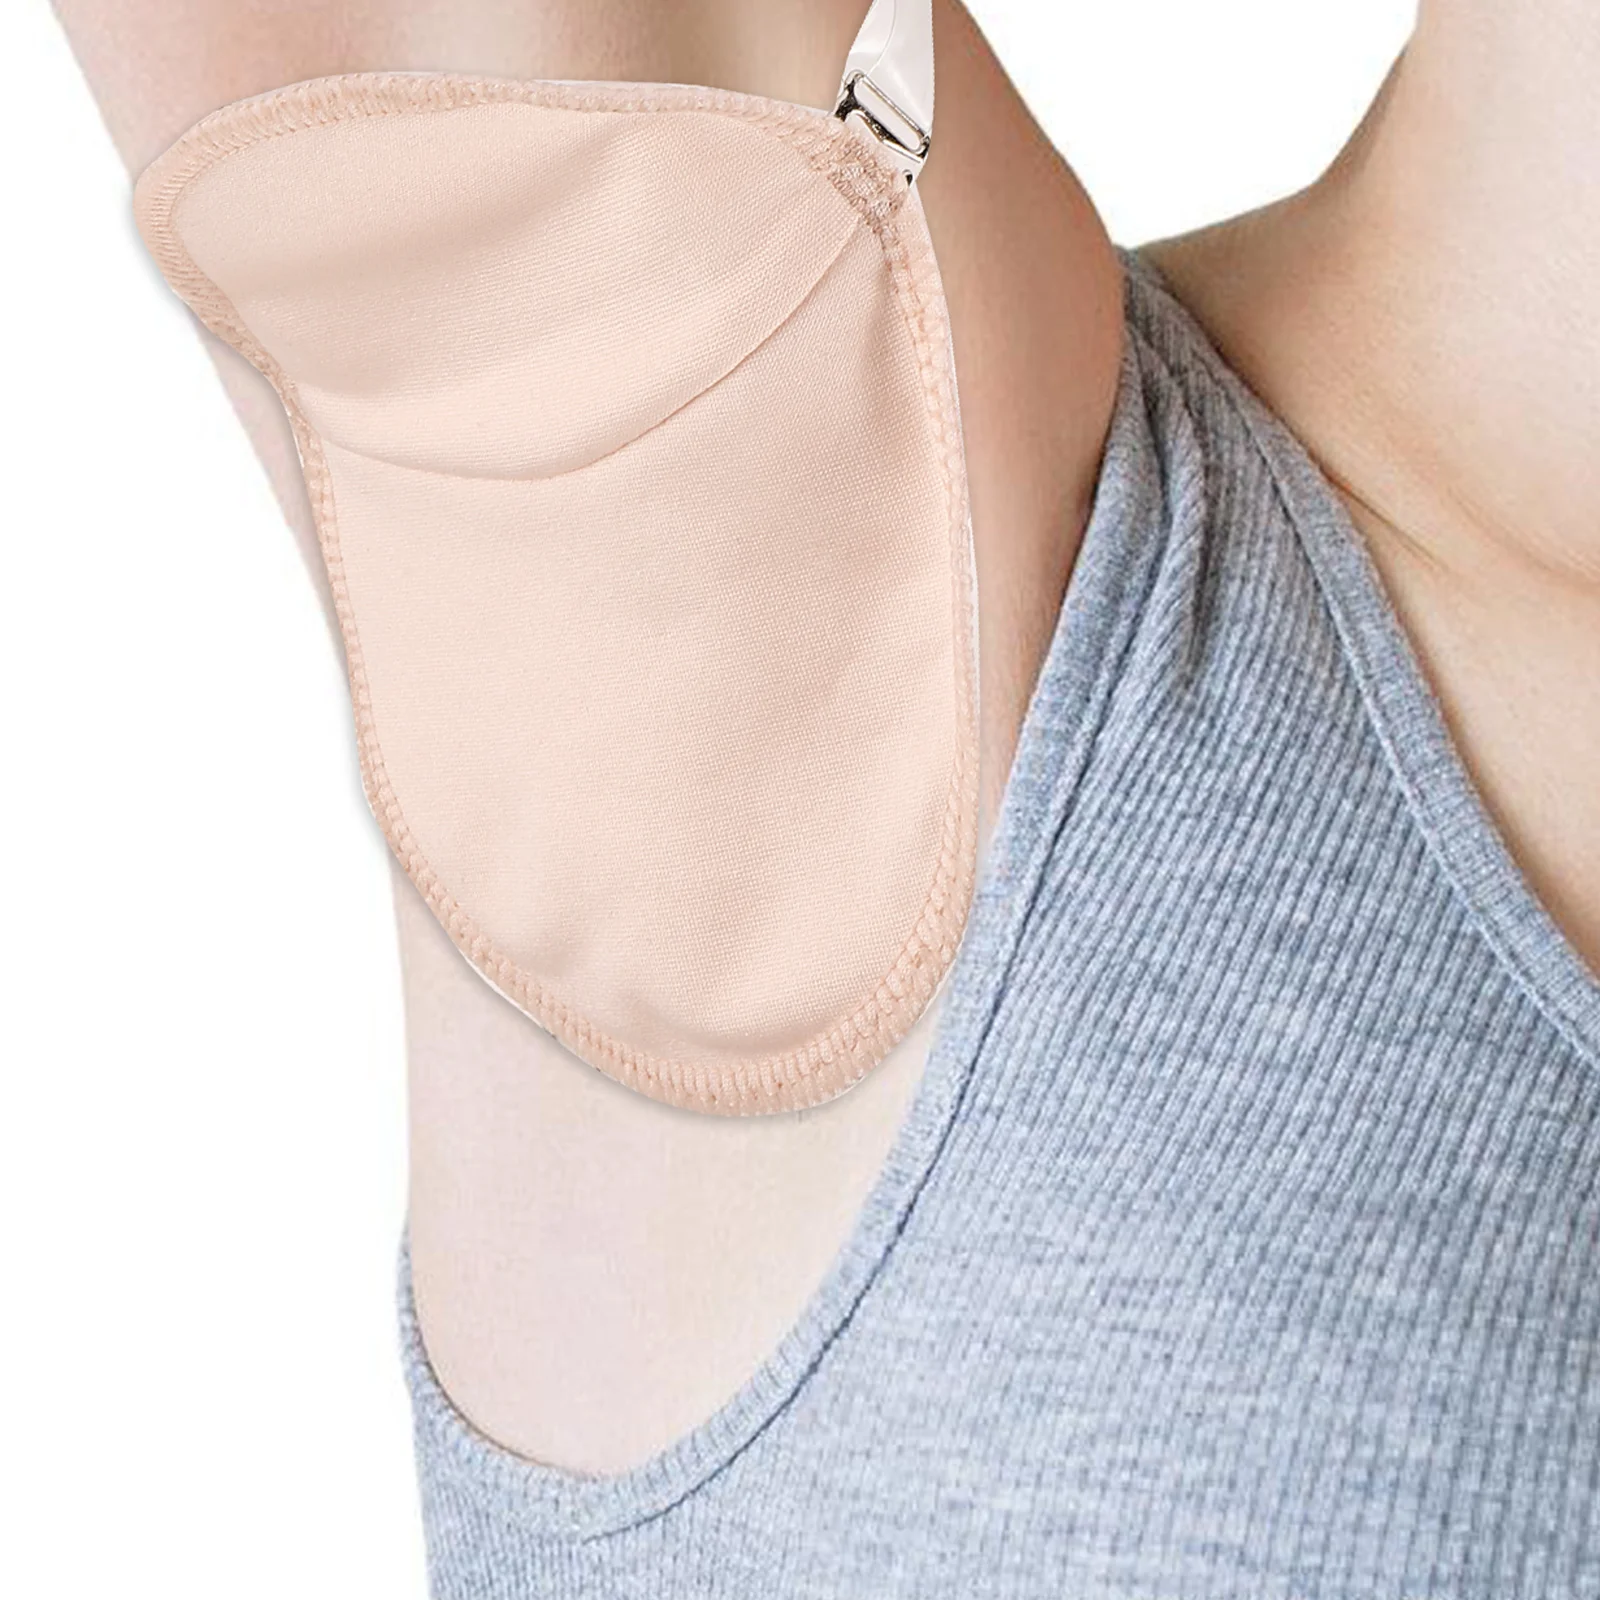 Armpit Sweat Pads Underarm Sweat Pad Absorbent Dress Shields Armpit Guards Non Visible Adhesive Armpit Protection Sweating